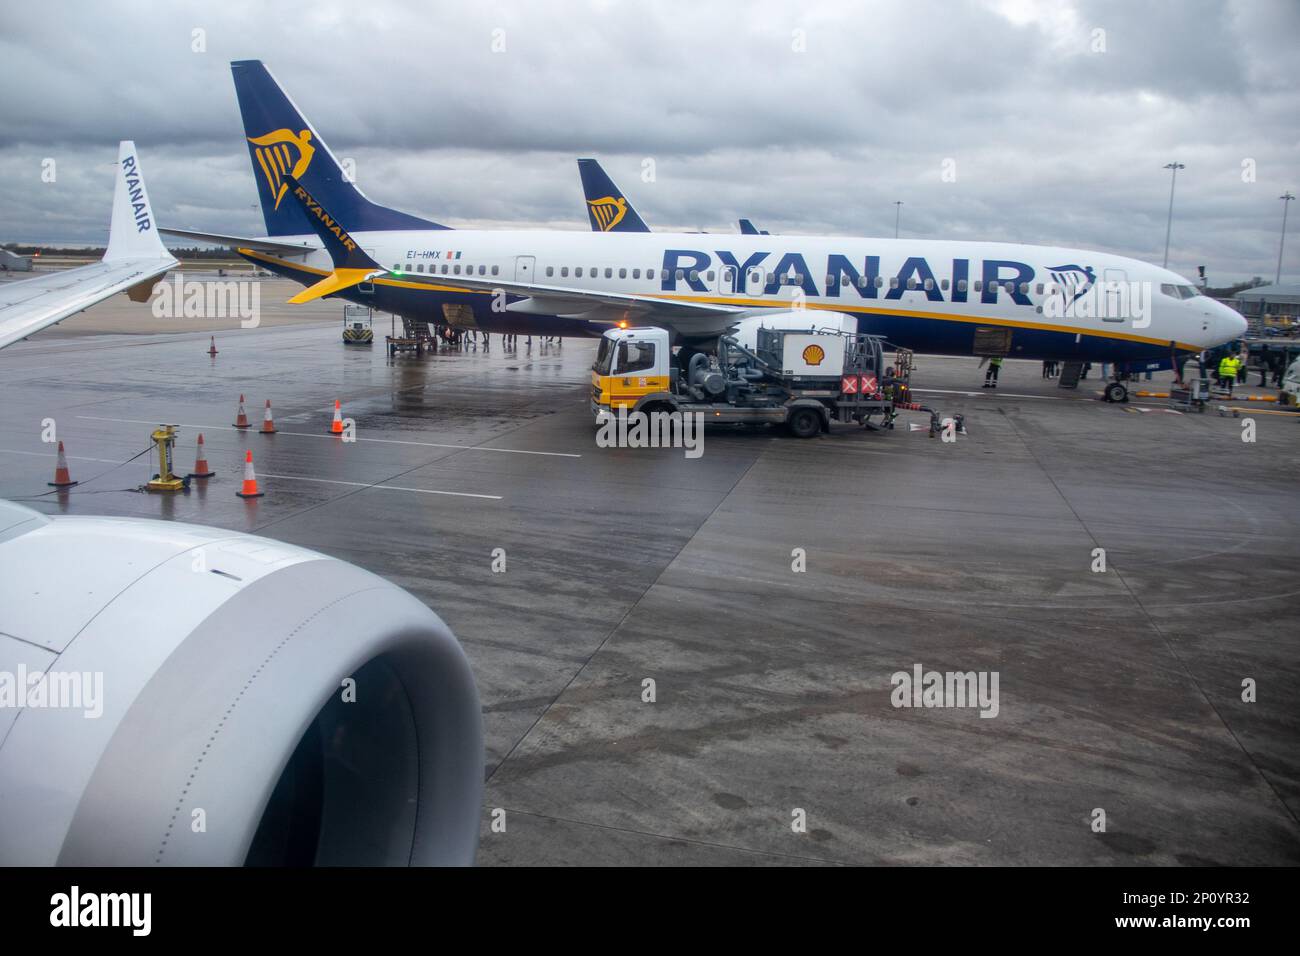 Ryan Air am Flughafen Stansted. Kredit: Sinai Noor / Alamy Stock Photo Stockfoto